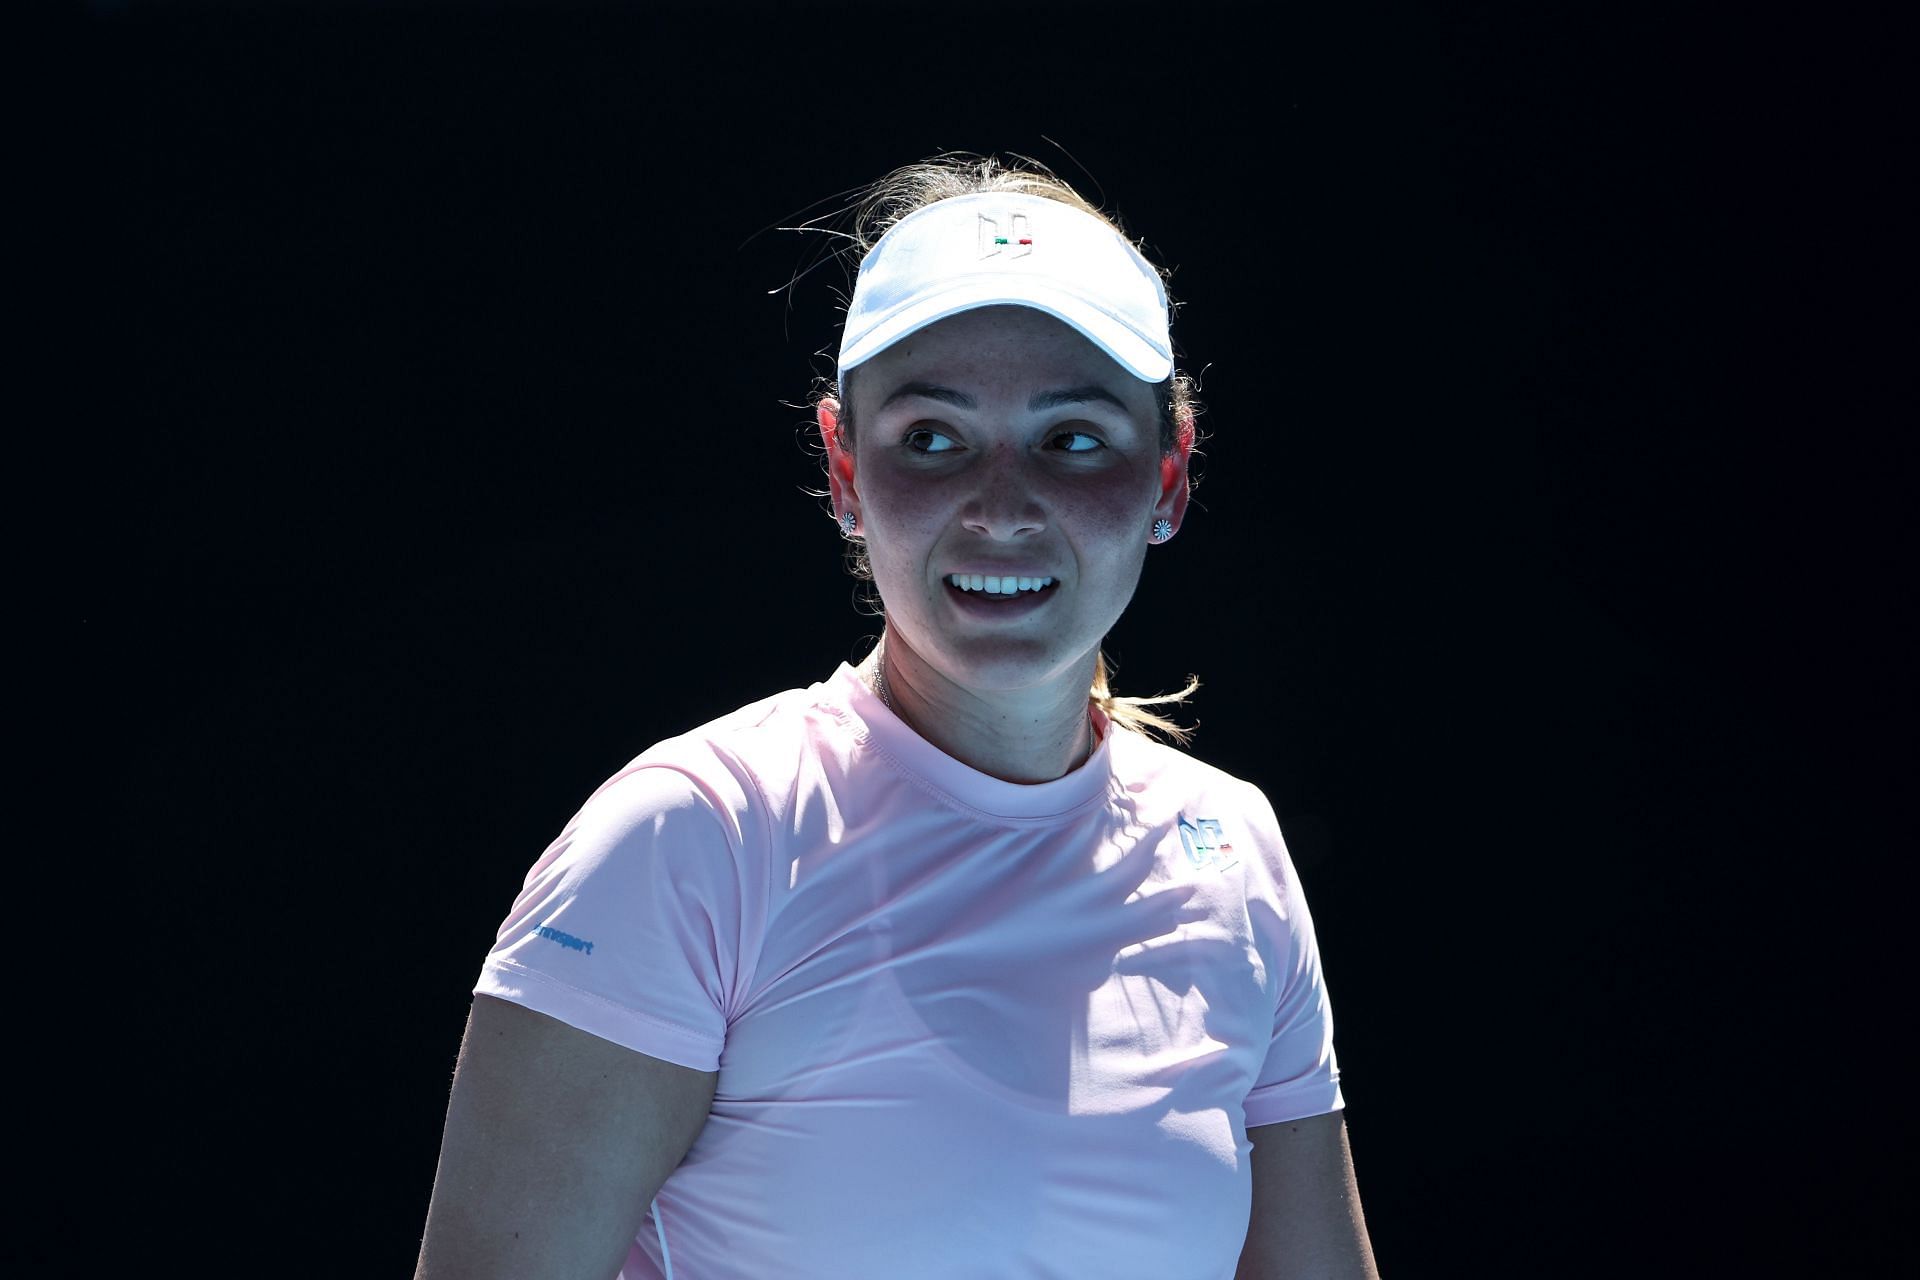 Rybakina surpreendida por Vekic no WTA 500 de Berlim